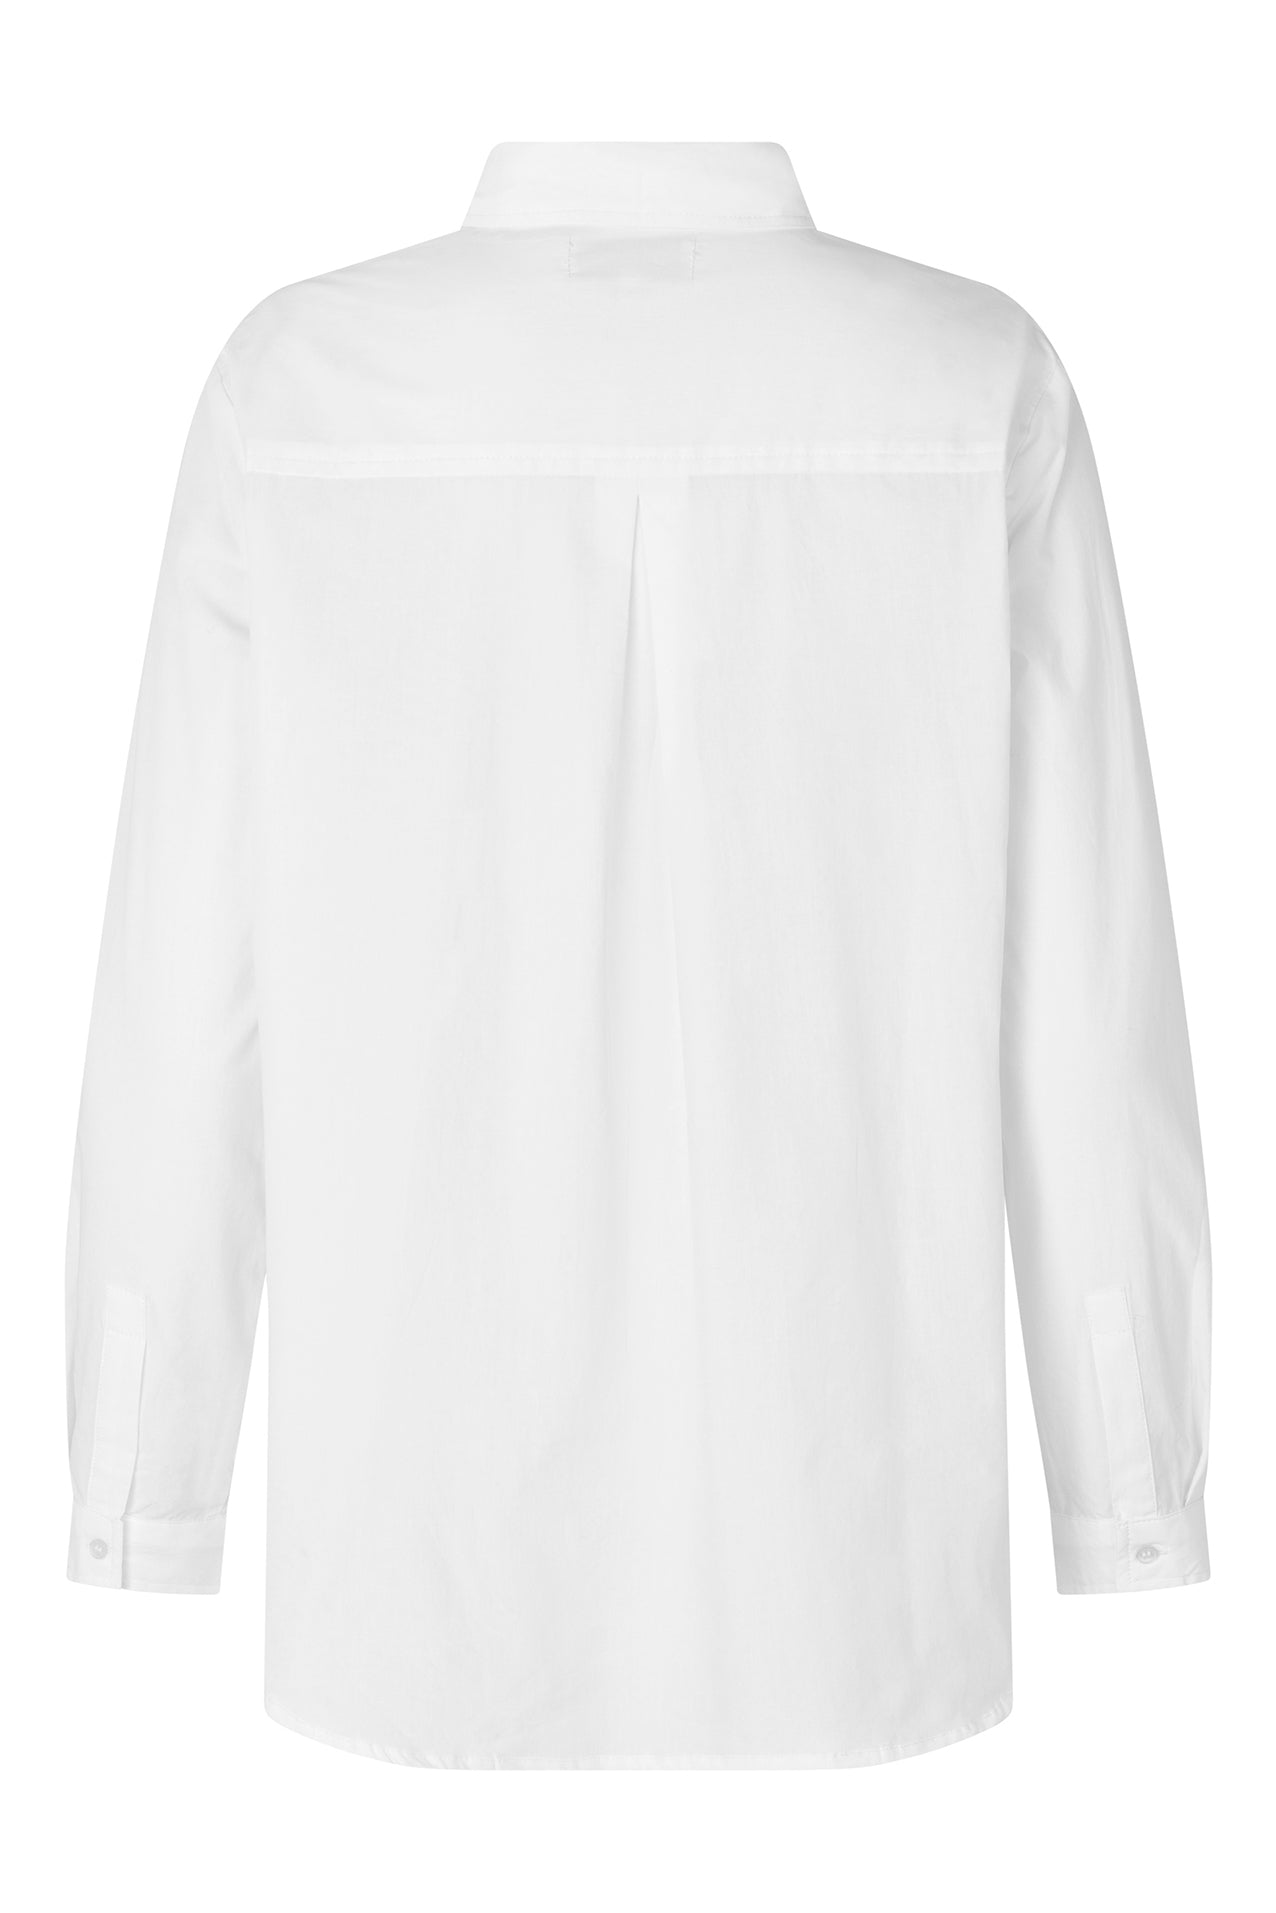 Lollys Laundry JoyceLL Shirt LS Shirt 01 White